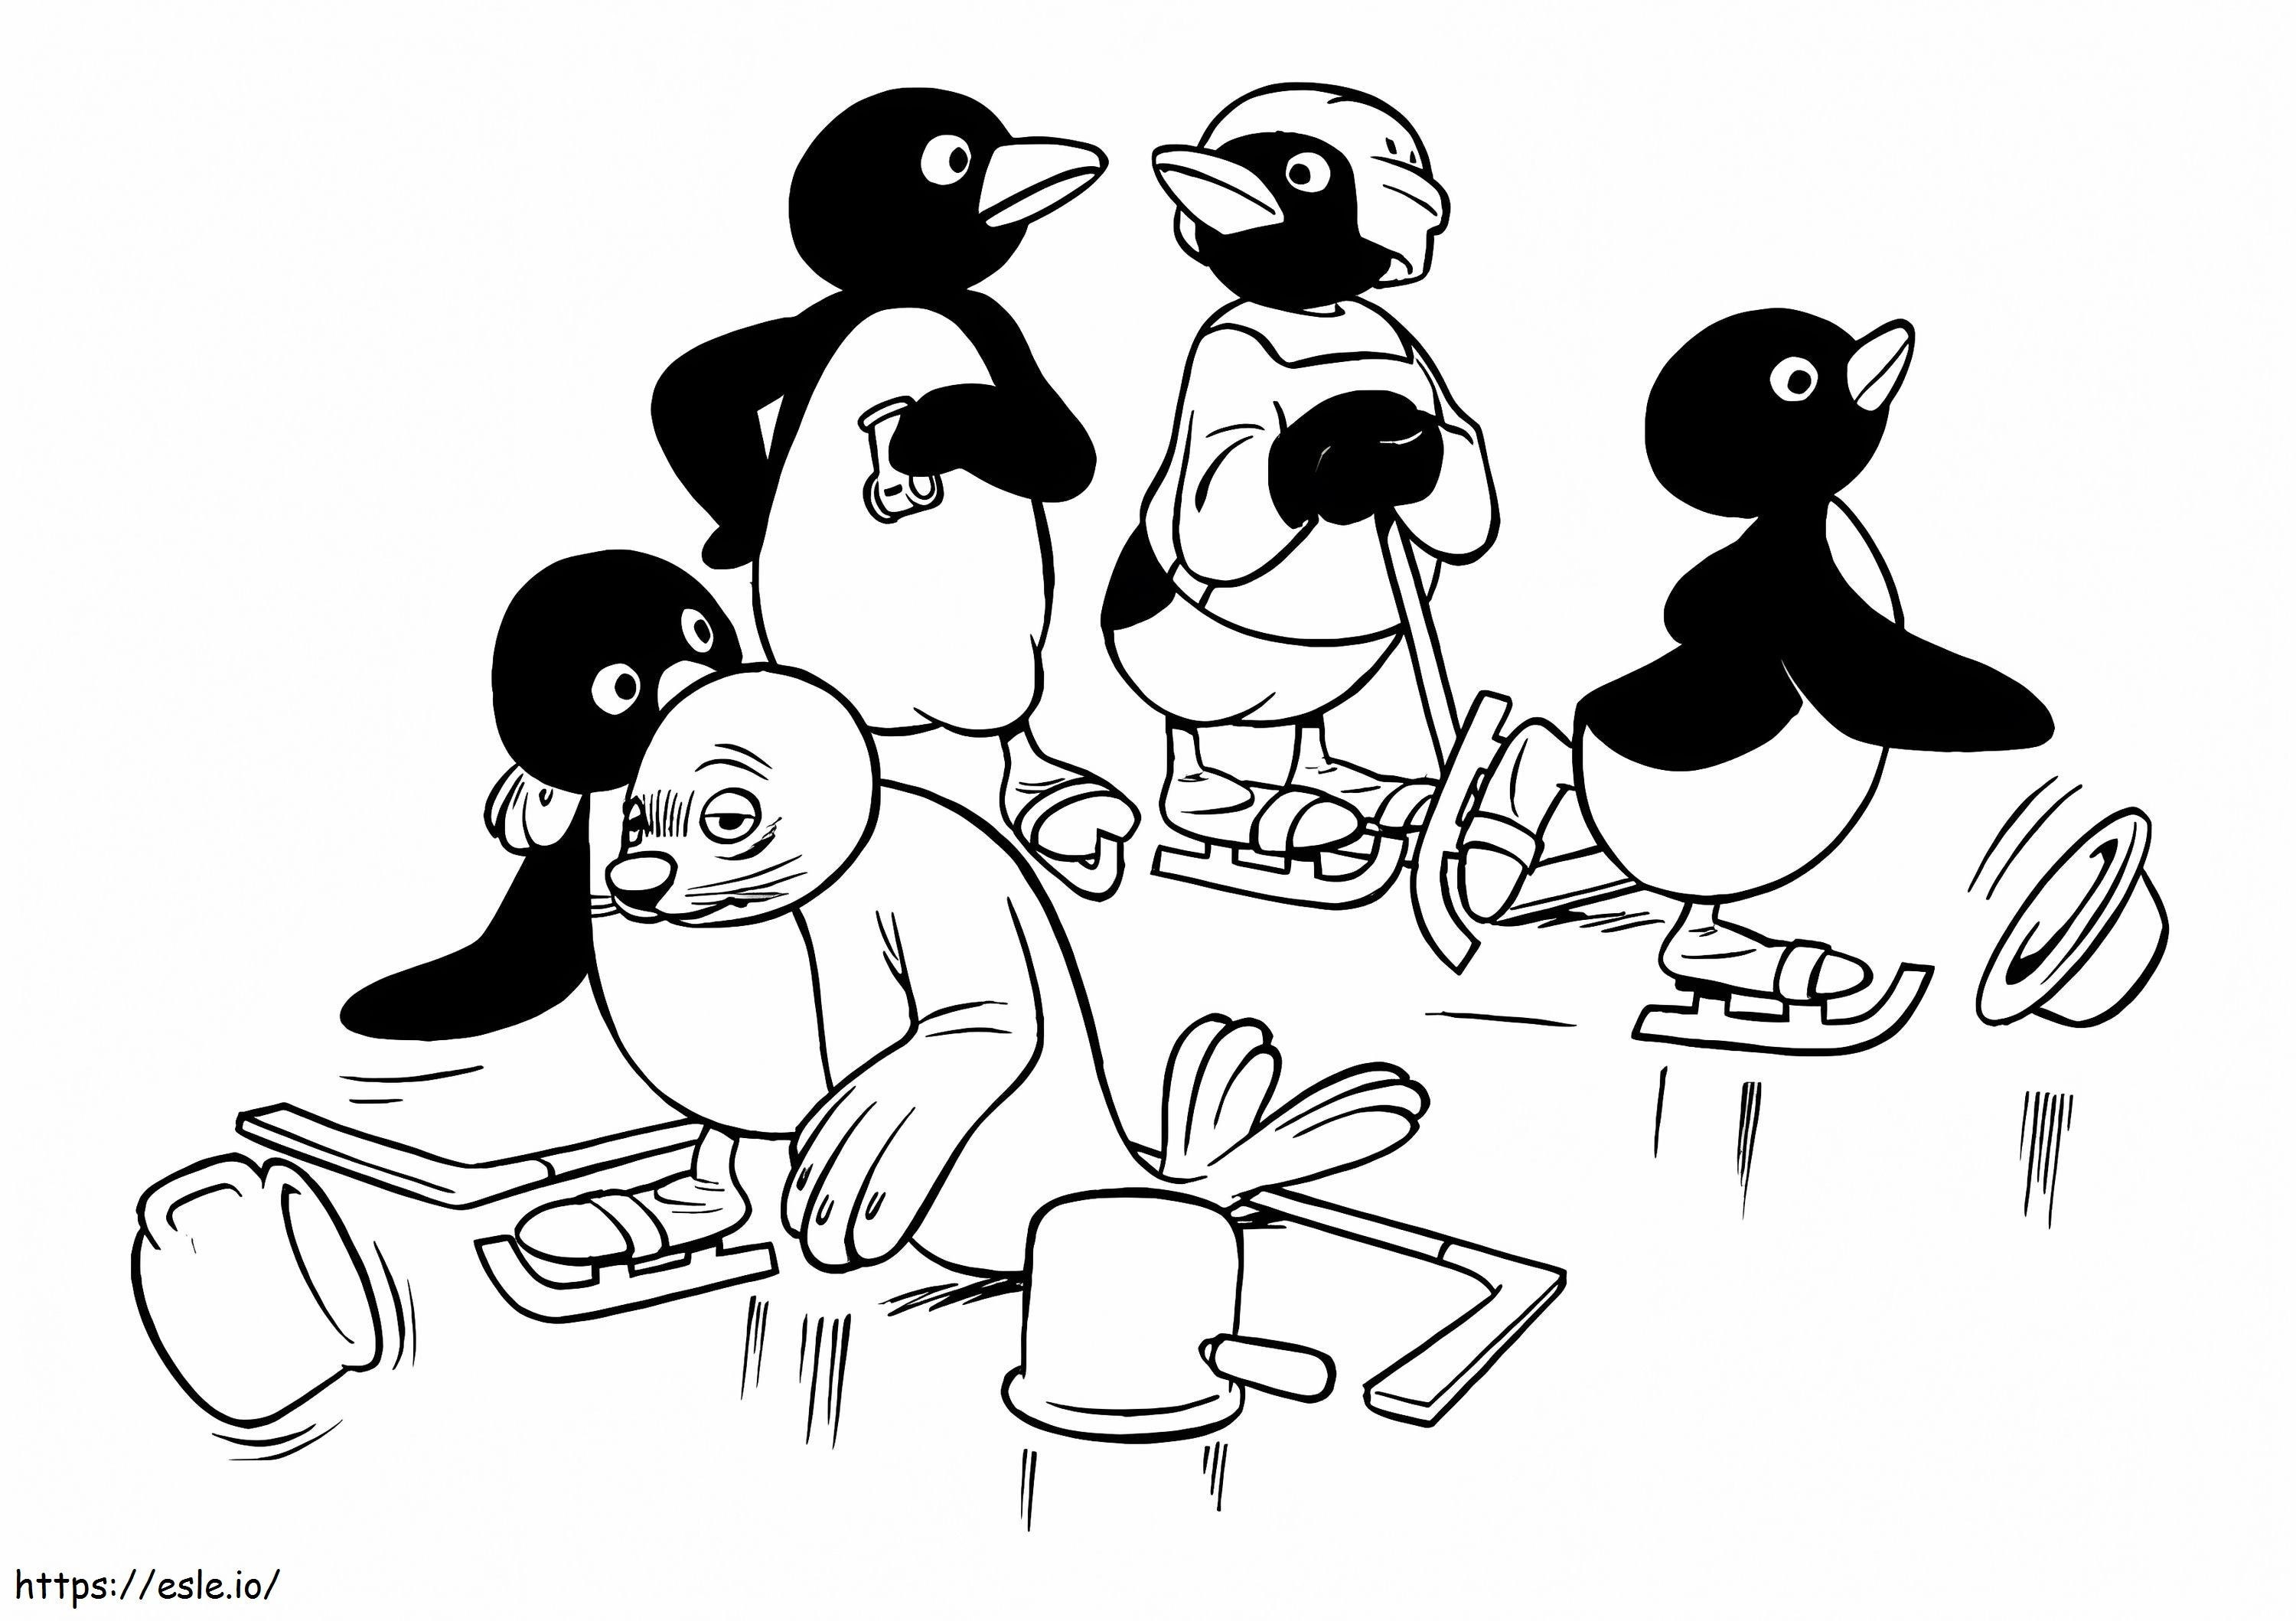 Pingu Team coloring page